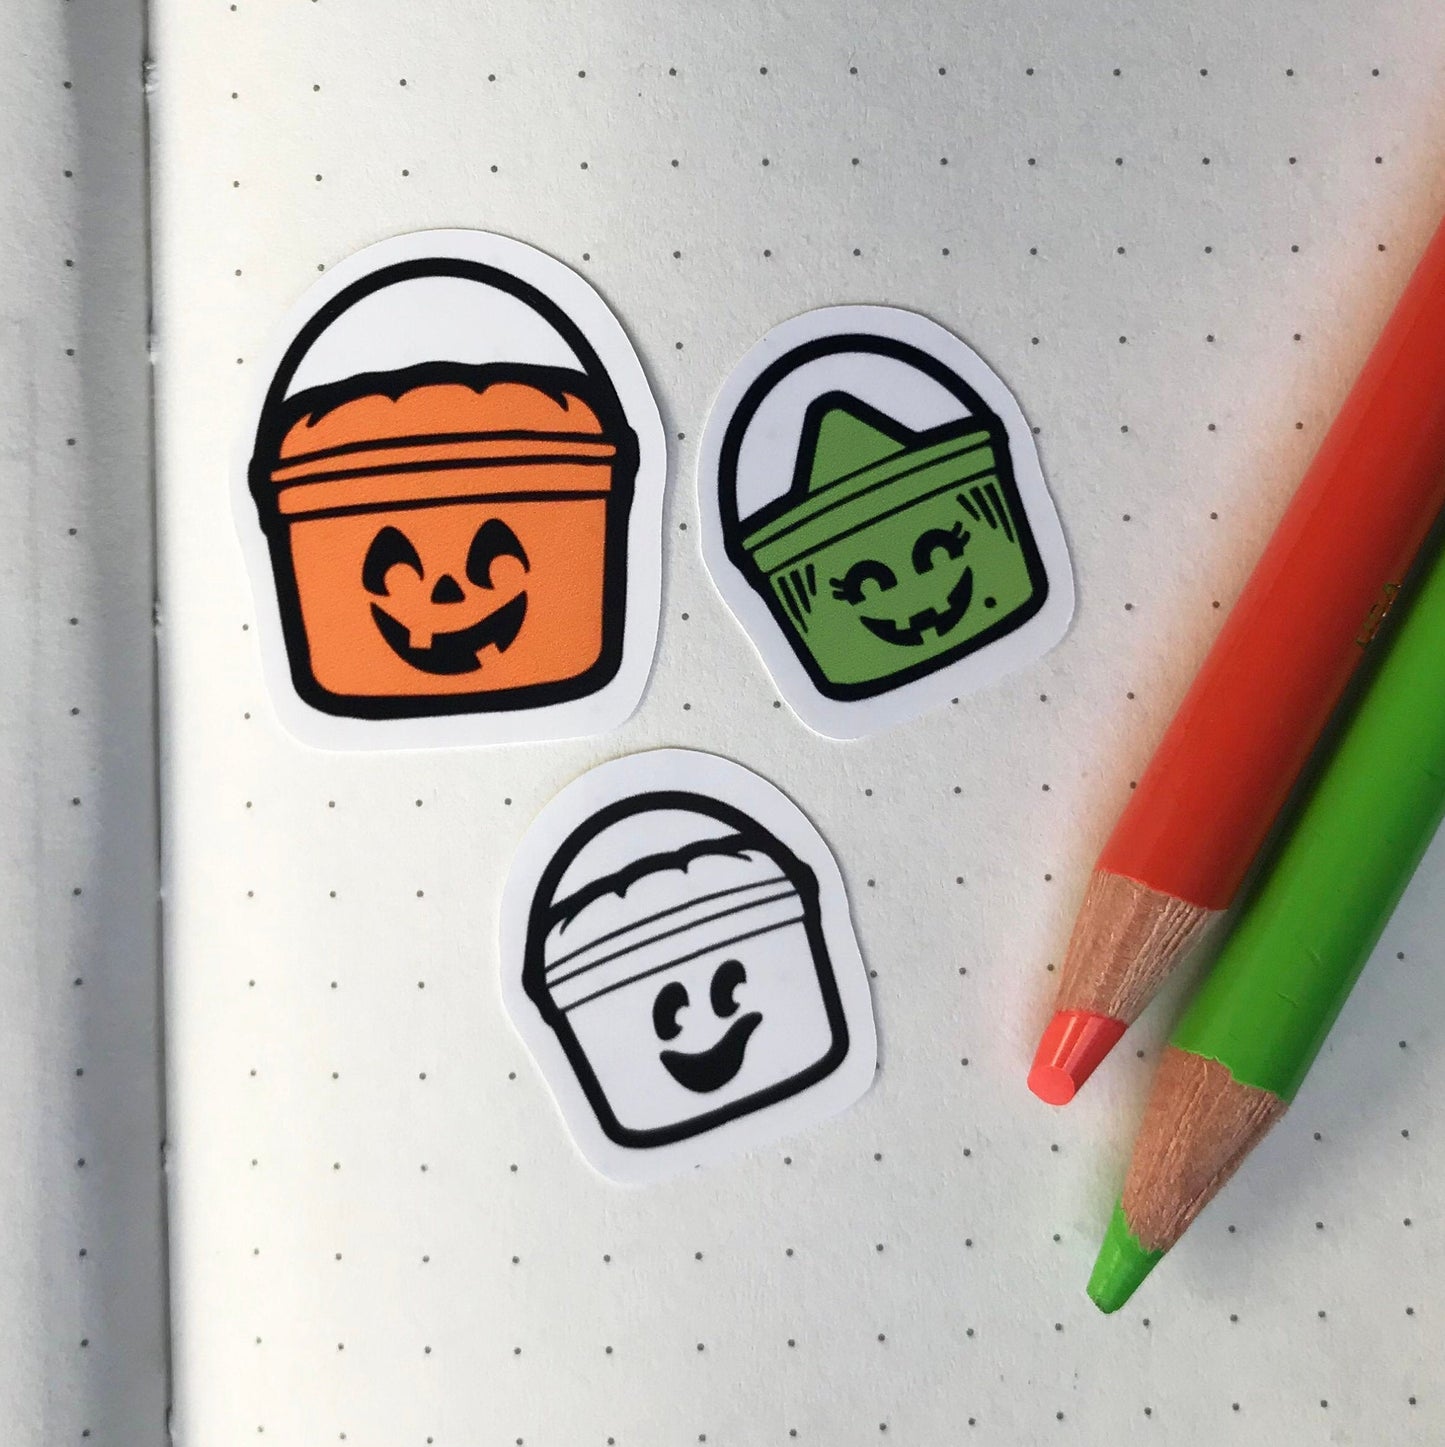 Boo Bucket Stickers, Halloween, Pumpkin, Witch, Ghost Jack O' lantern, stickers